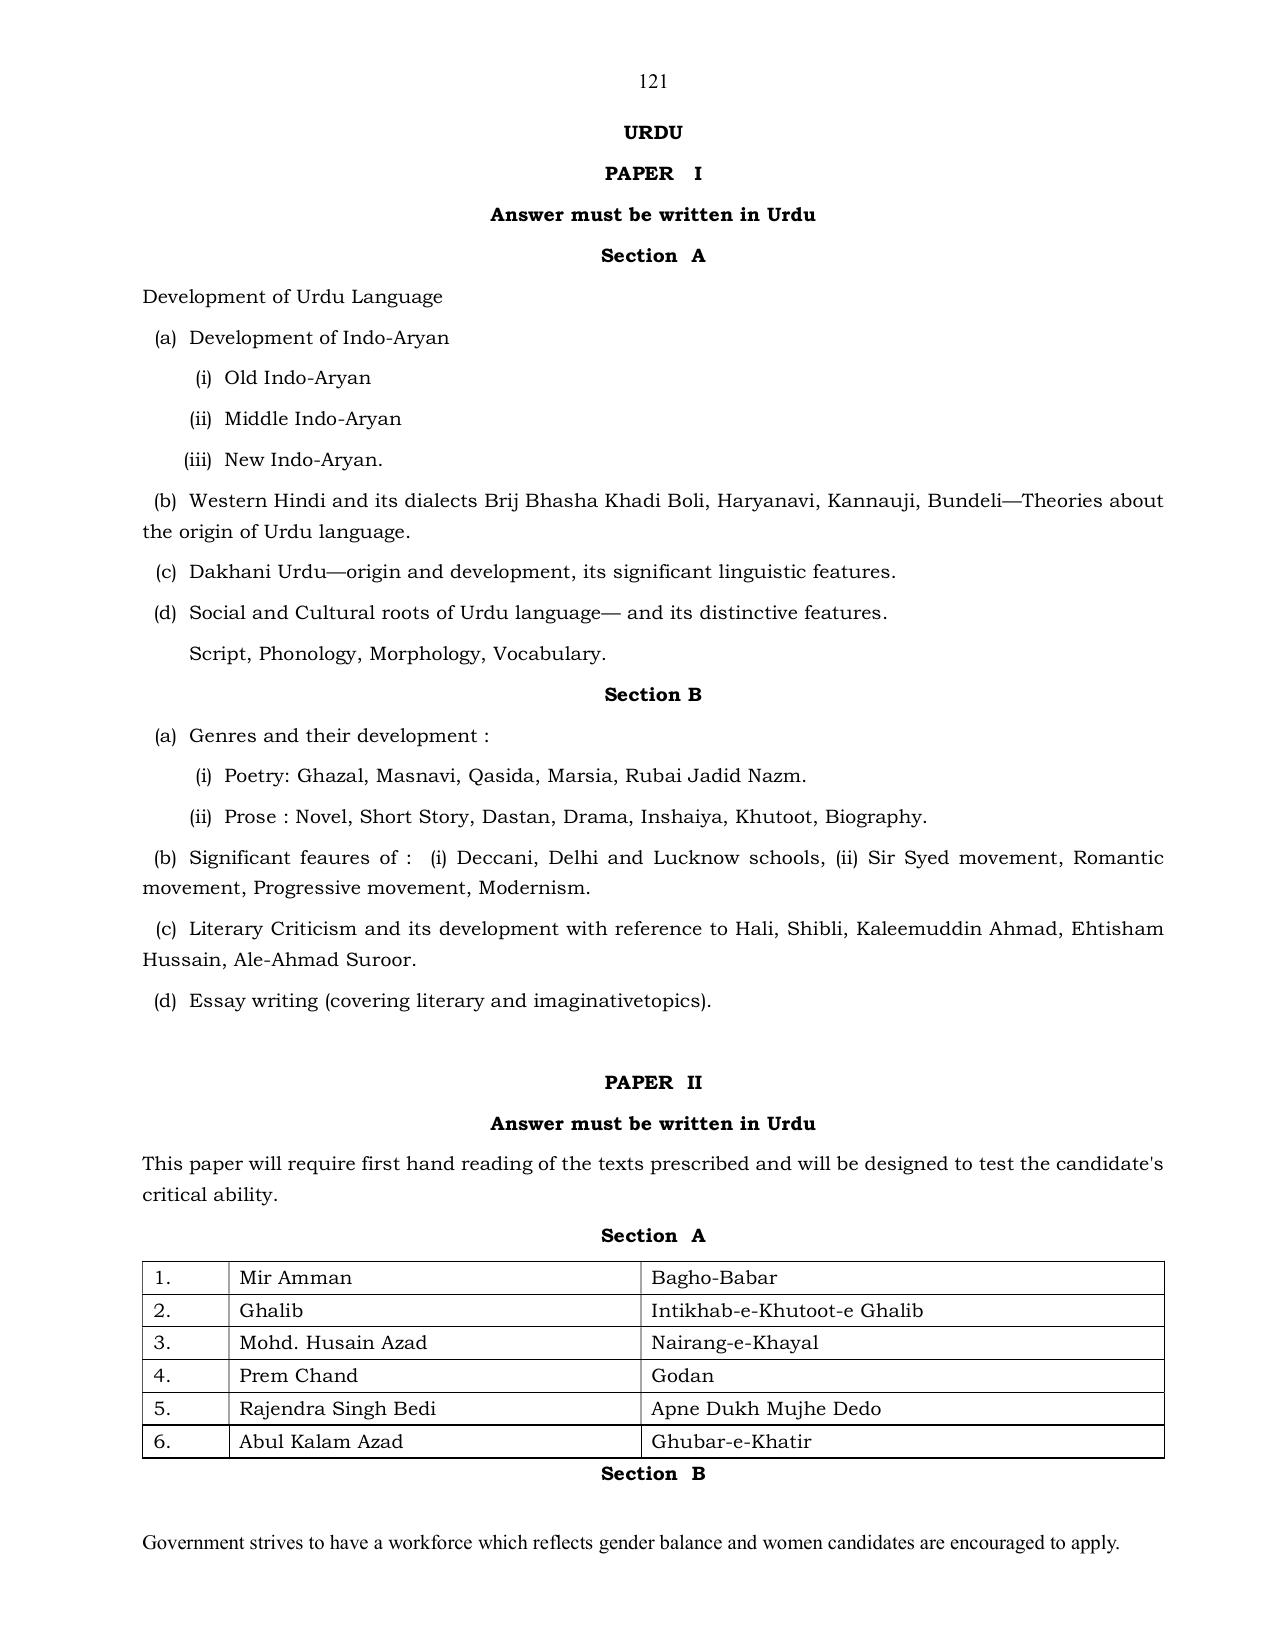 UPSC Syllabus Prelims & Mains Pdf Link - Page 97